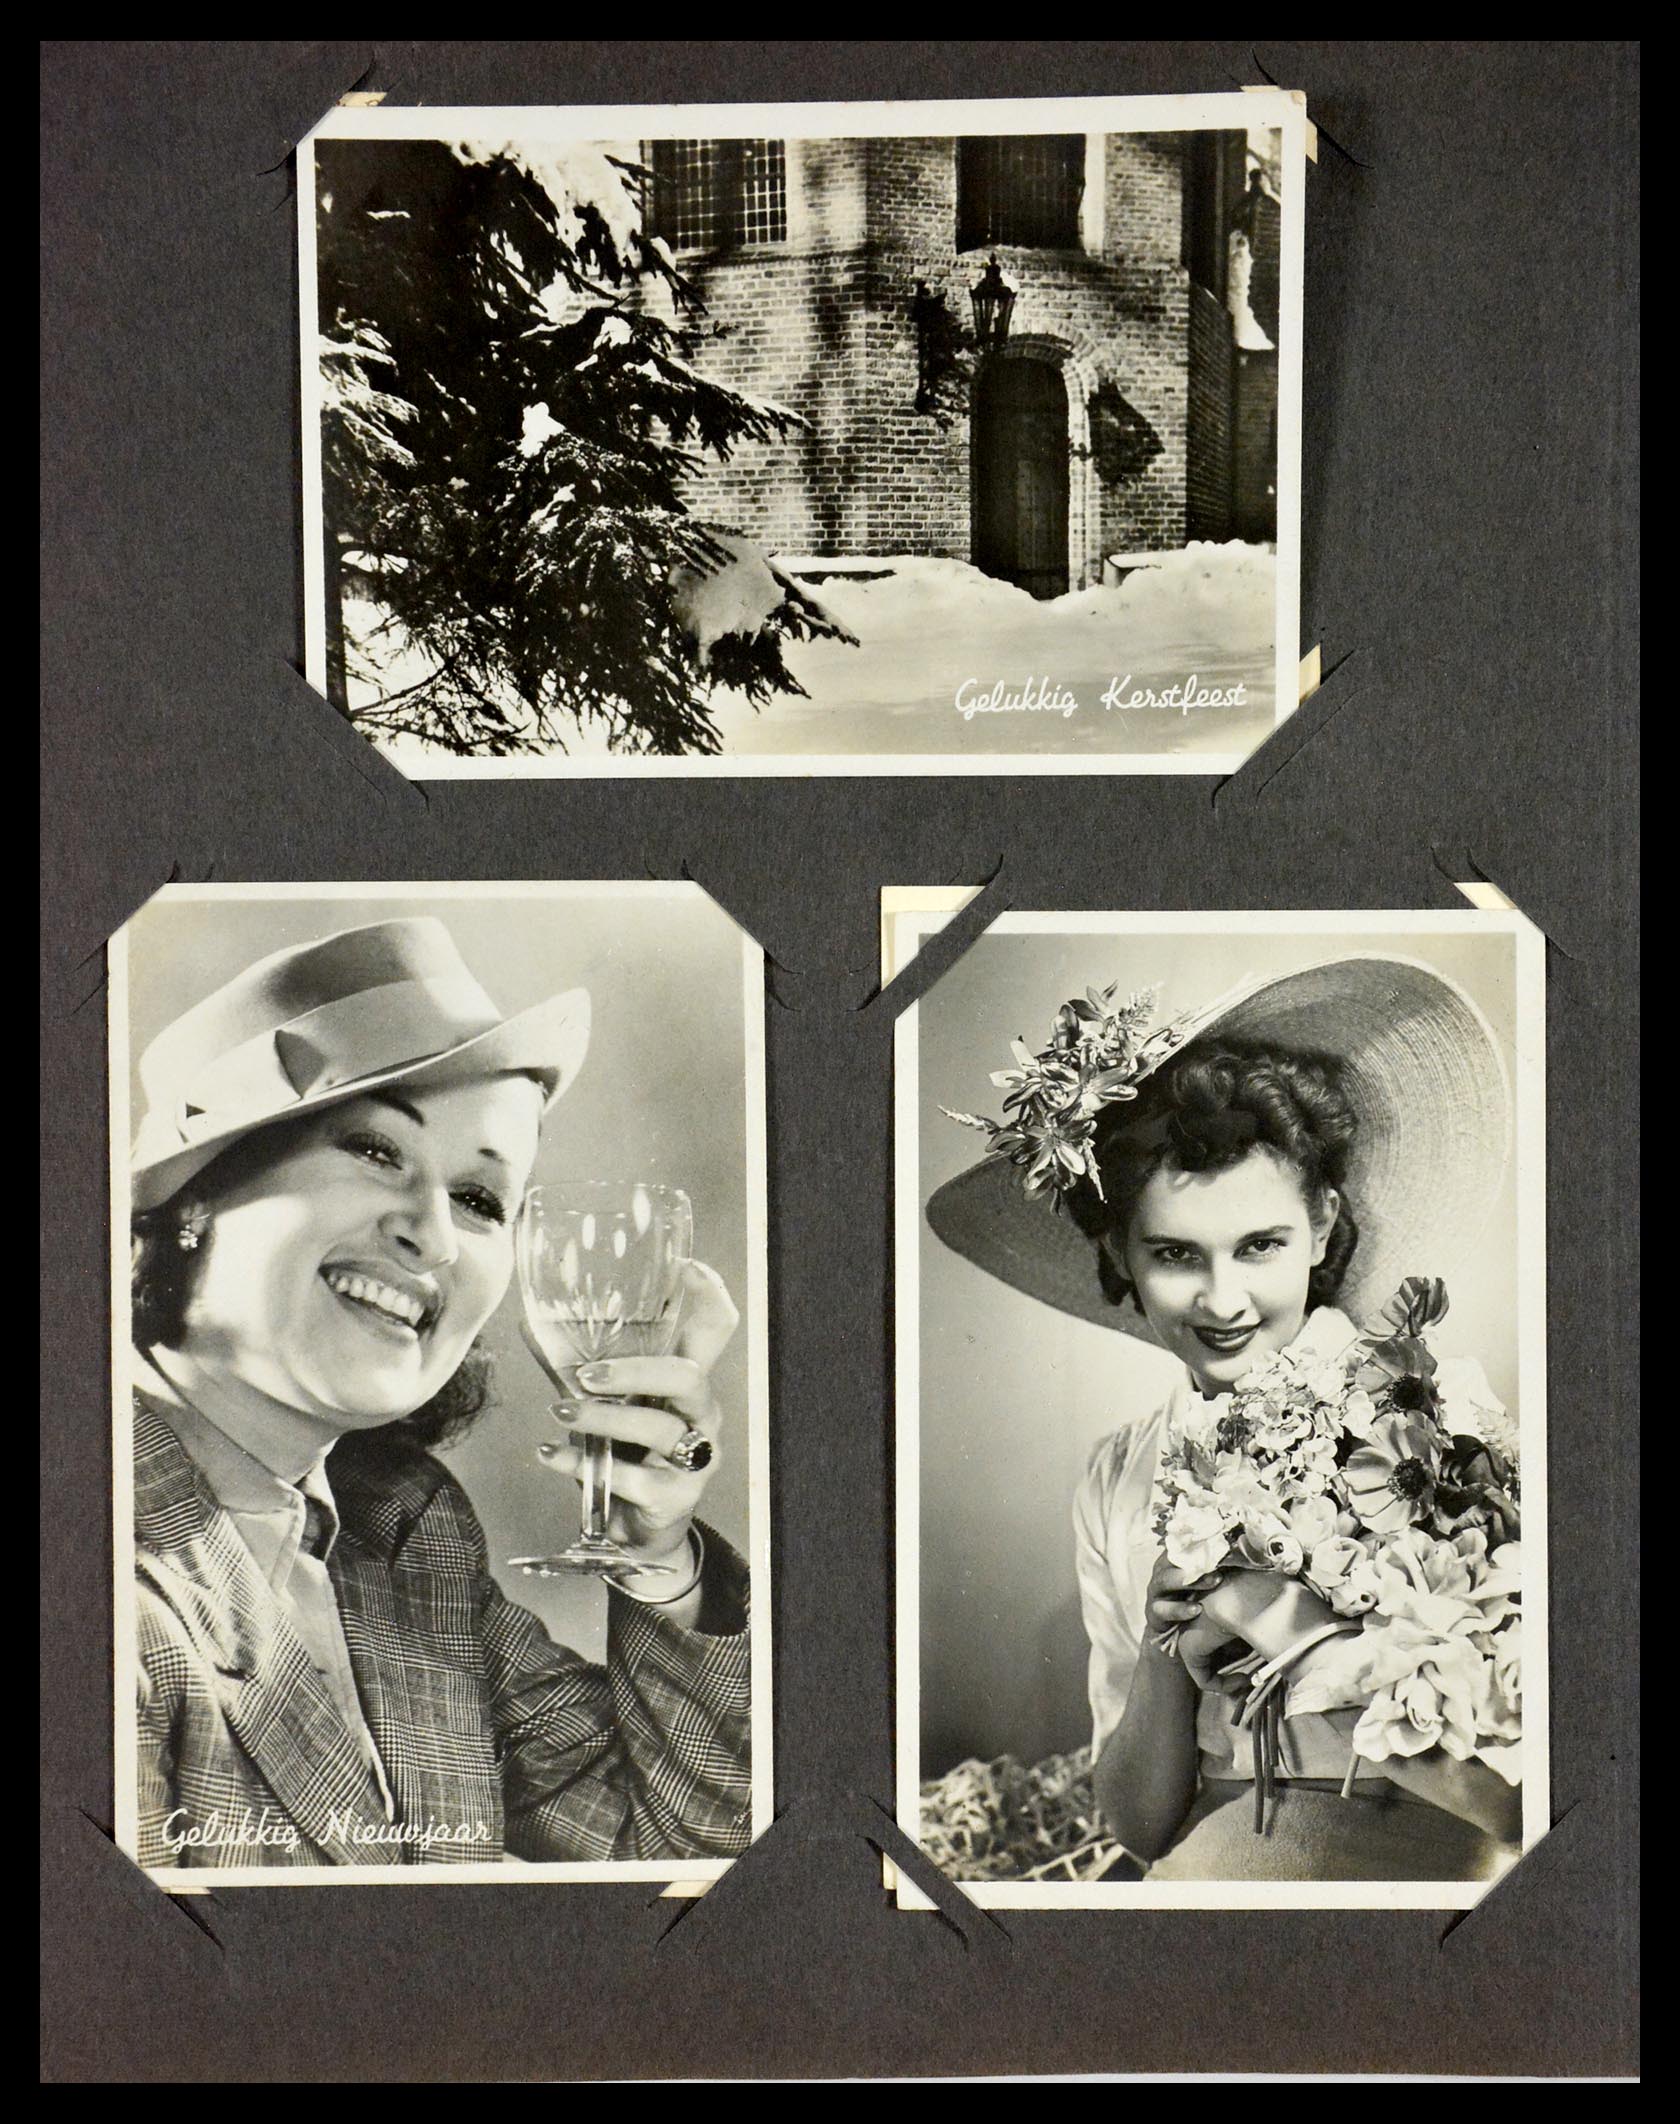 29518 023 - 29518 Netherlands picture postcards 1939-1940.